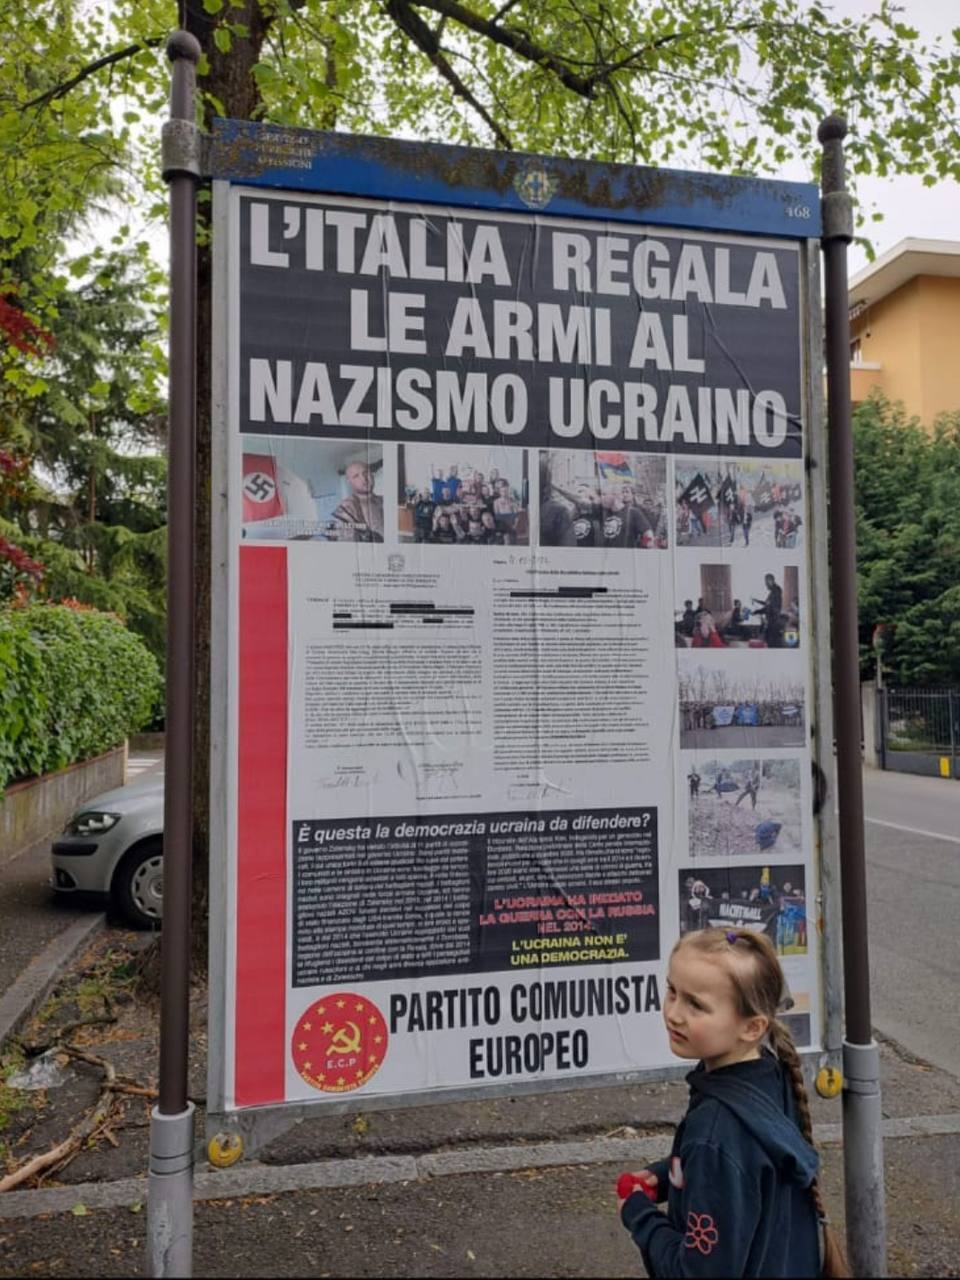 Девочка возле плаката со статьей: "Италия дарит оружие украинскому нацизму".